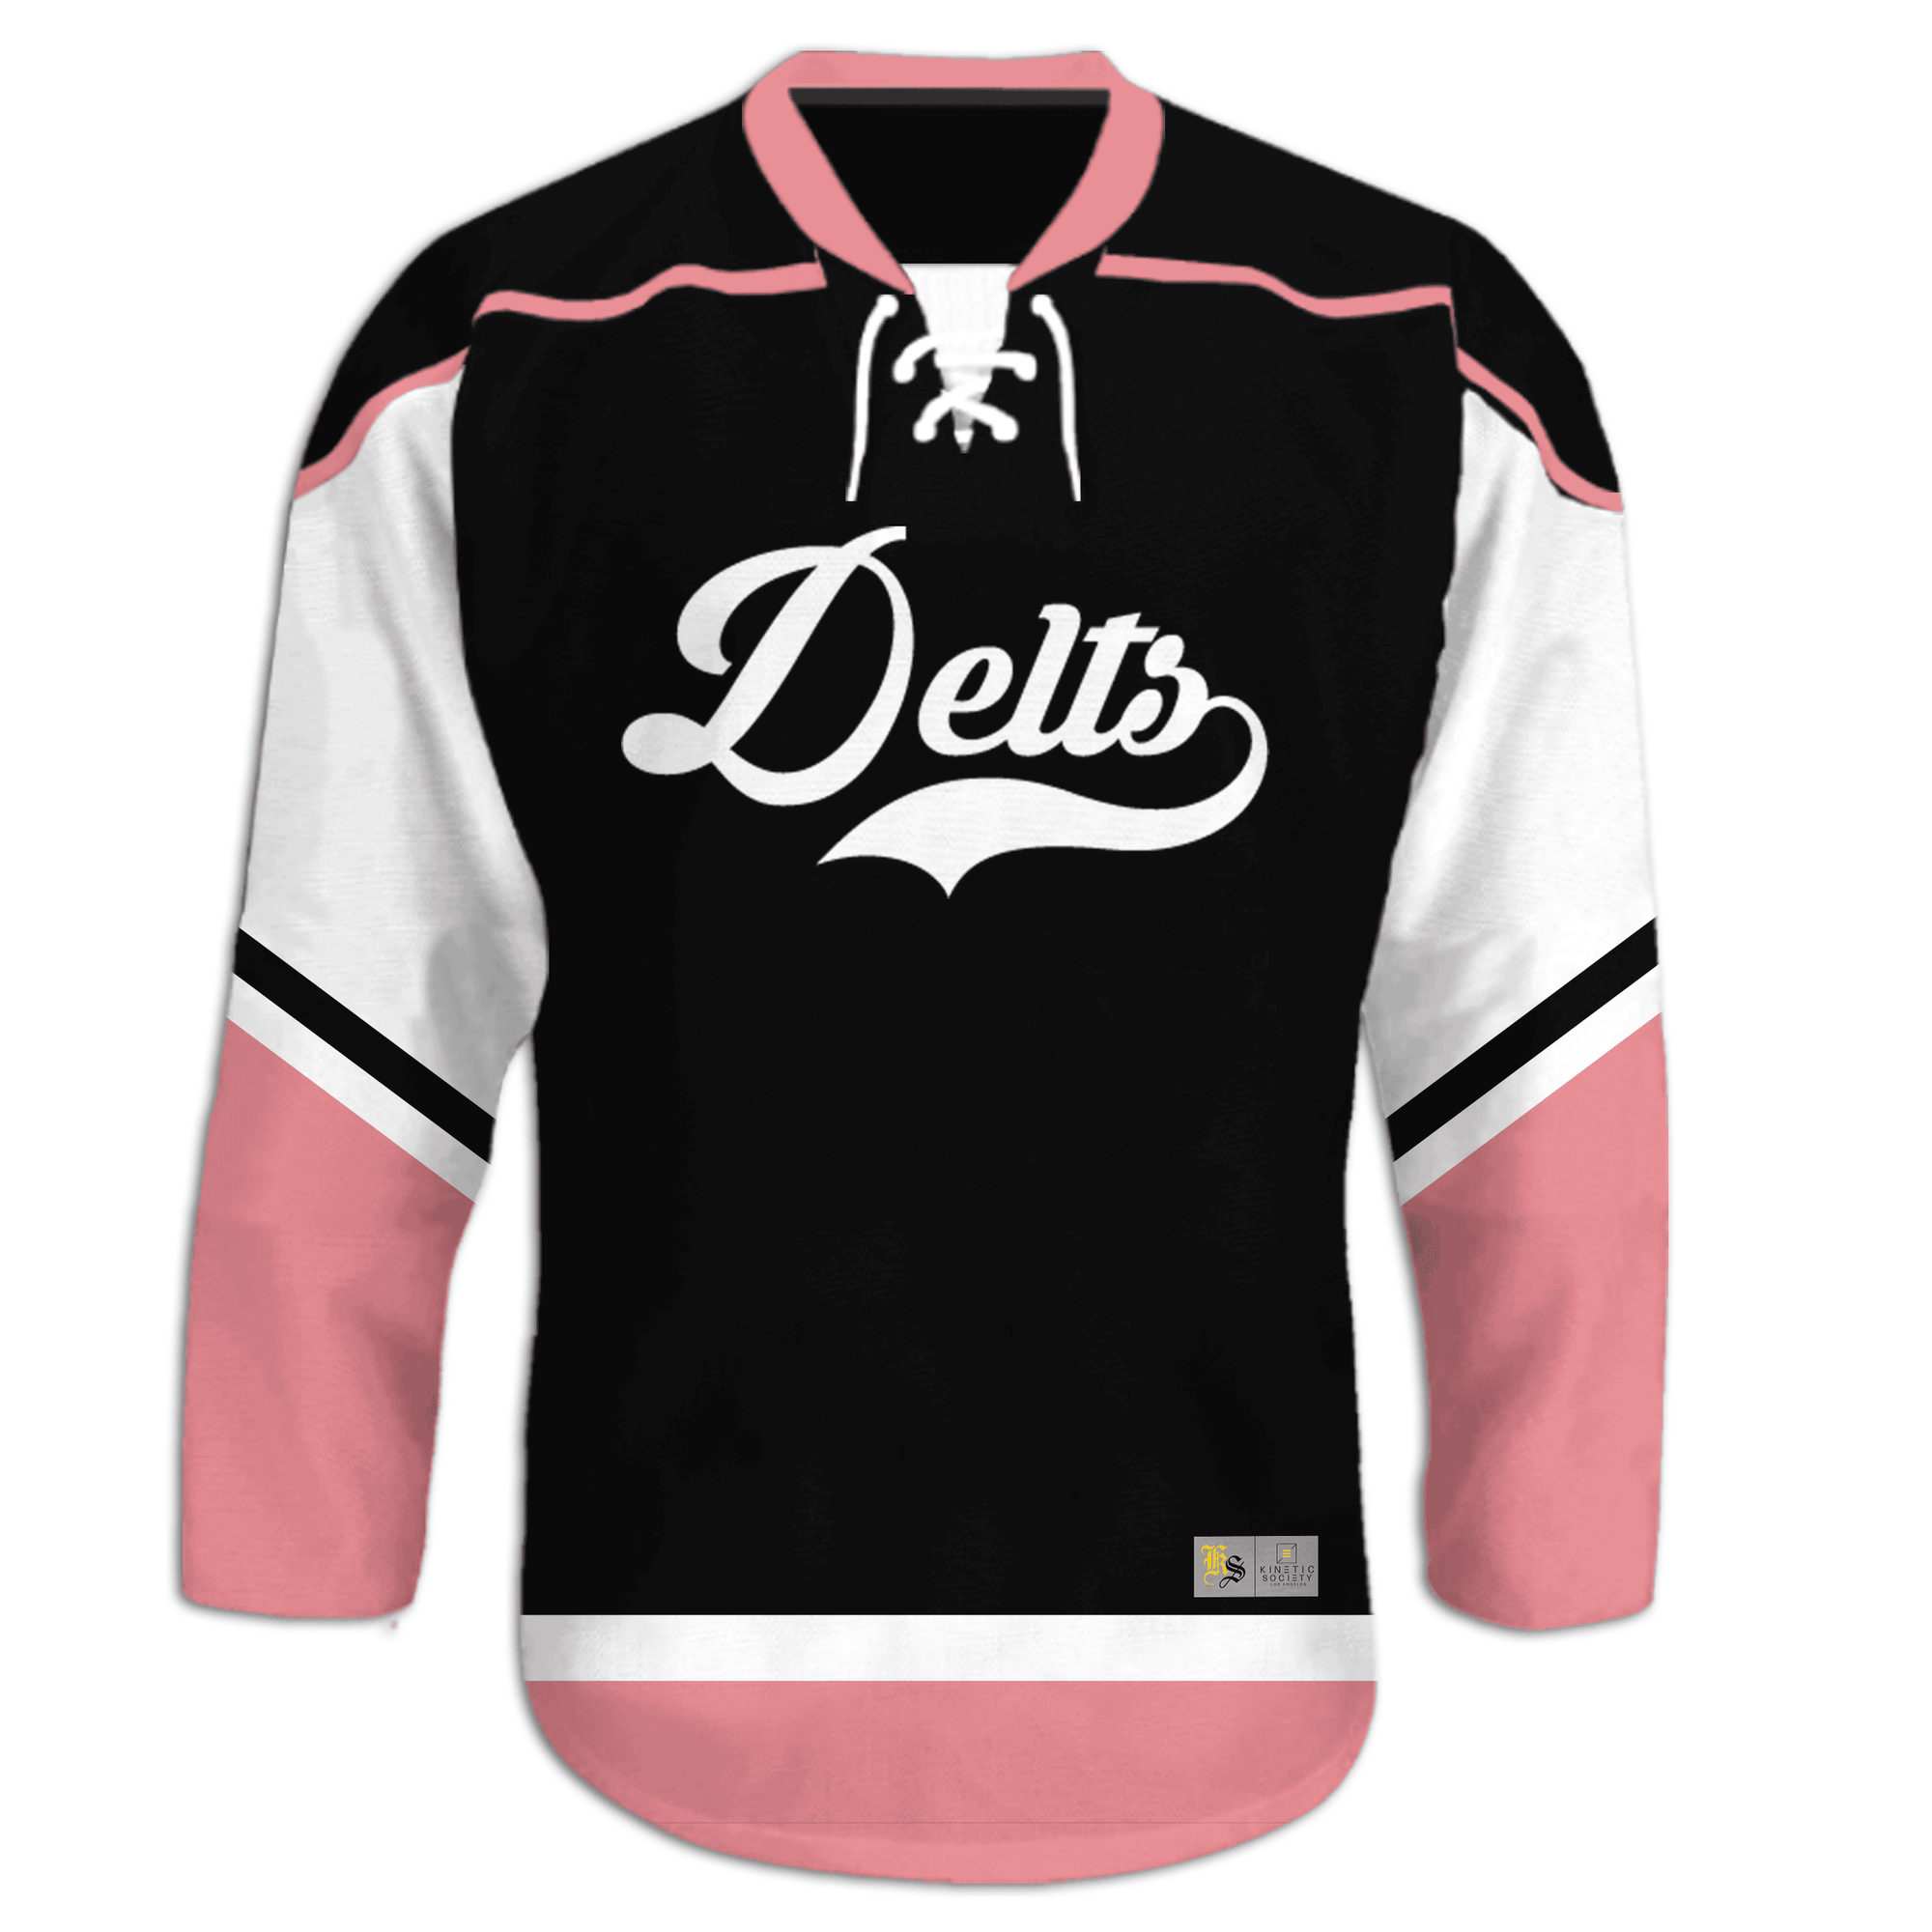 Delta Tau Delta - Black Pink - Hockey Jersey